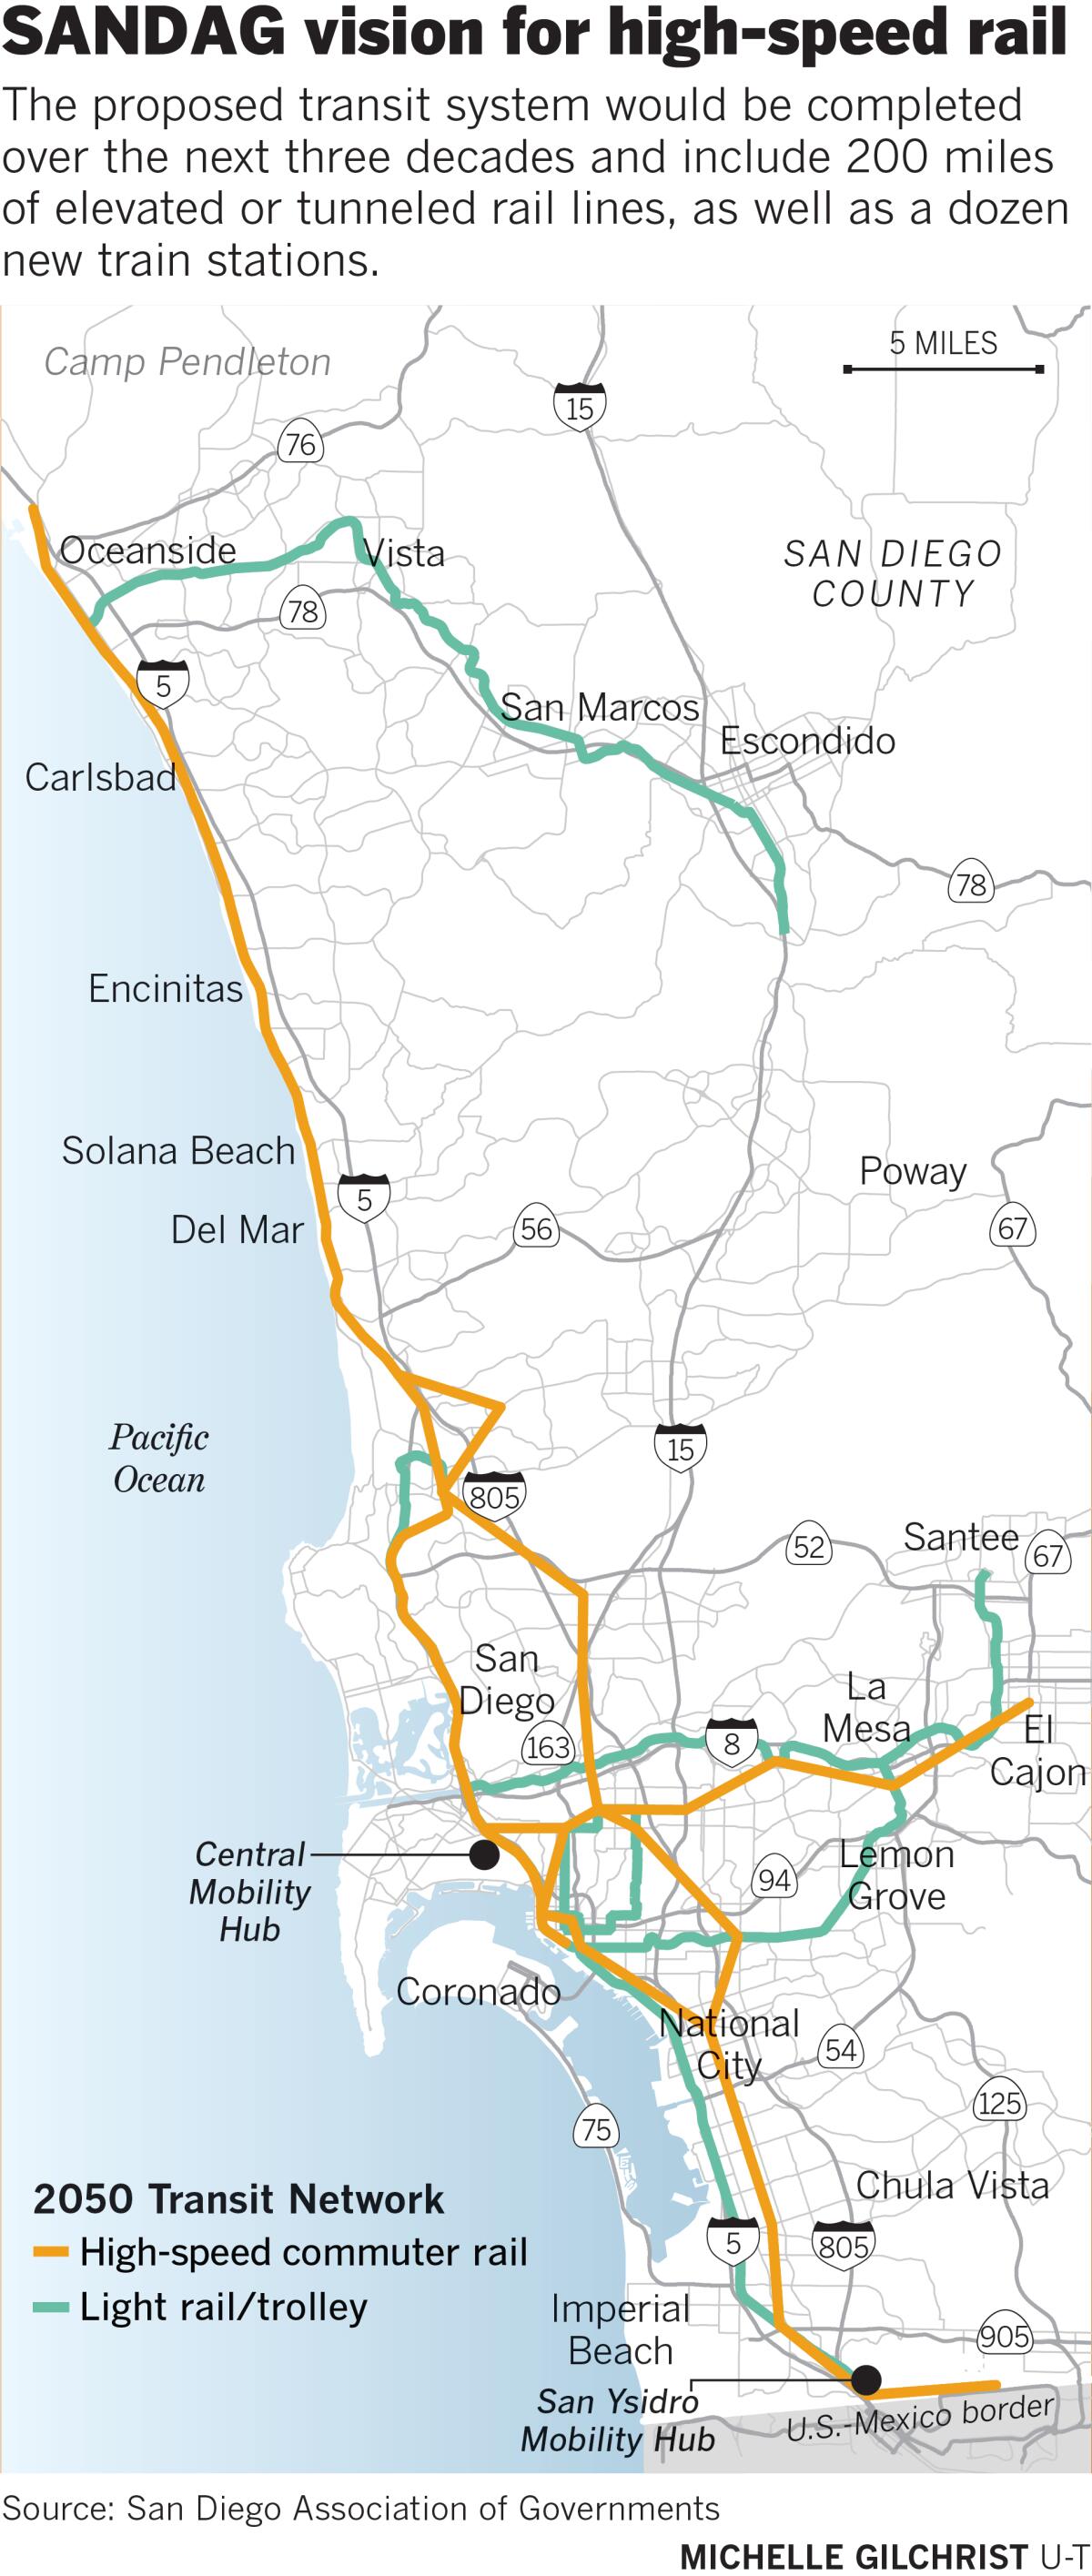 Santee, California (CA 92071) profile: population, maps, real